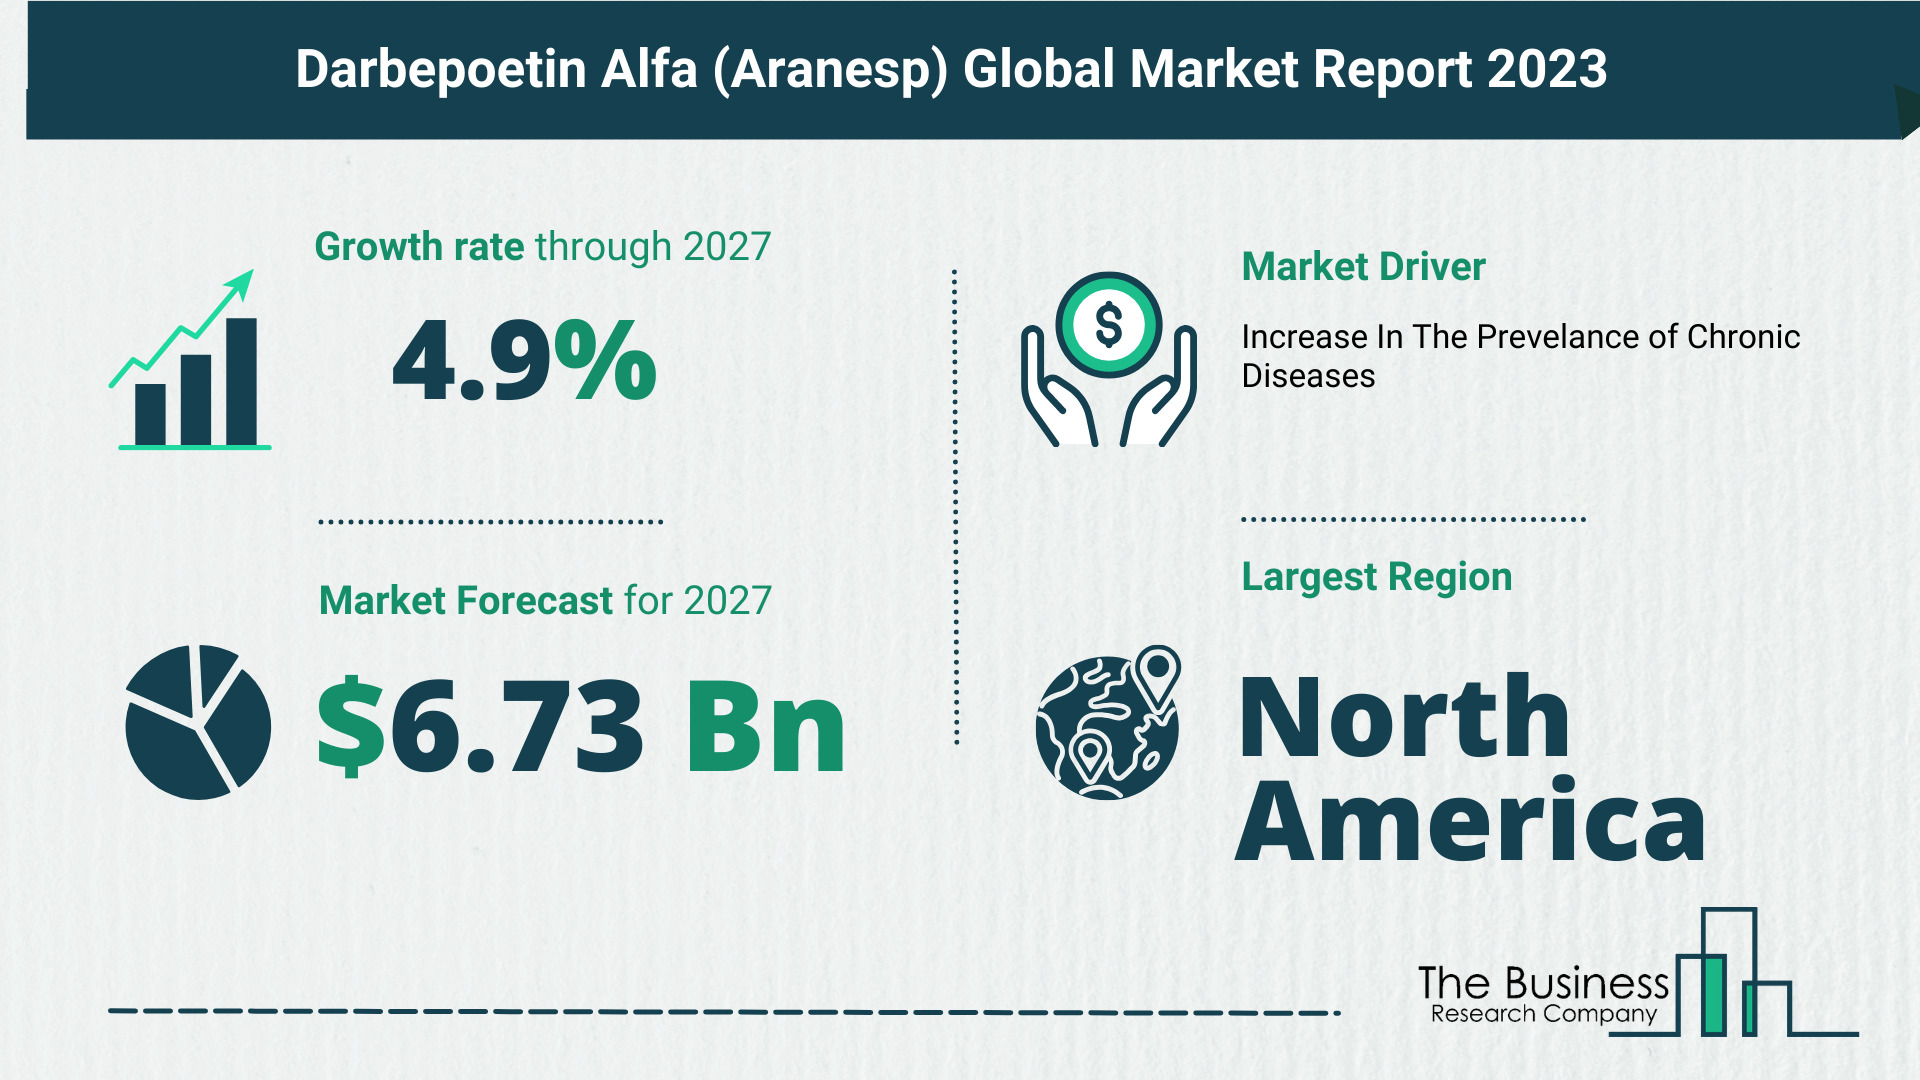 Global Darbepoetin Alfa (Aranesp) Market